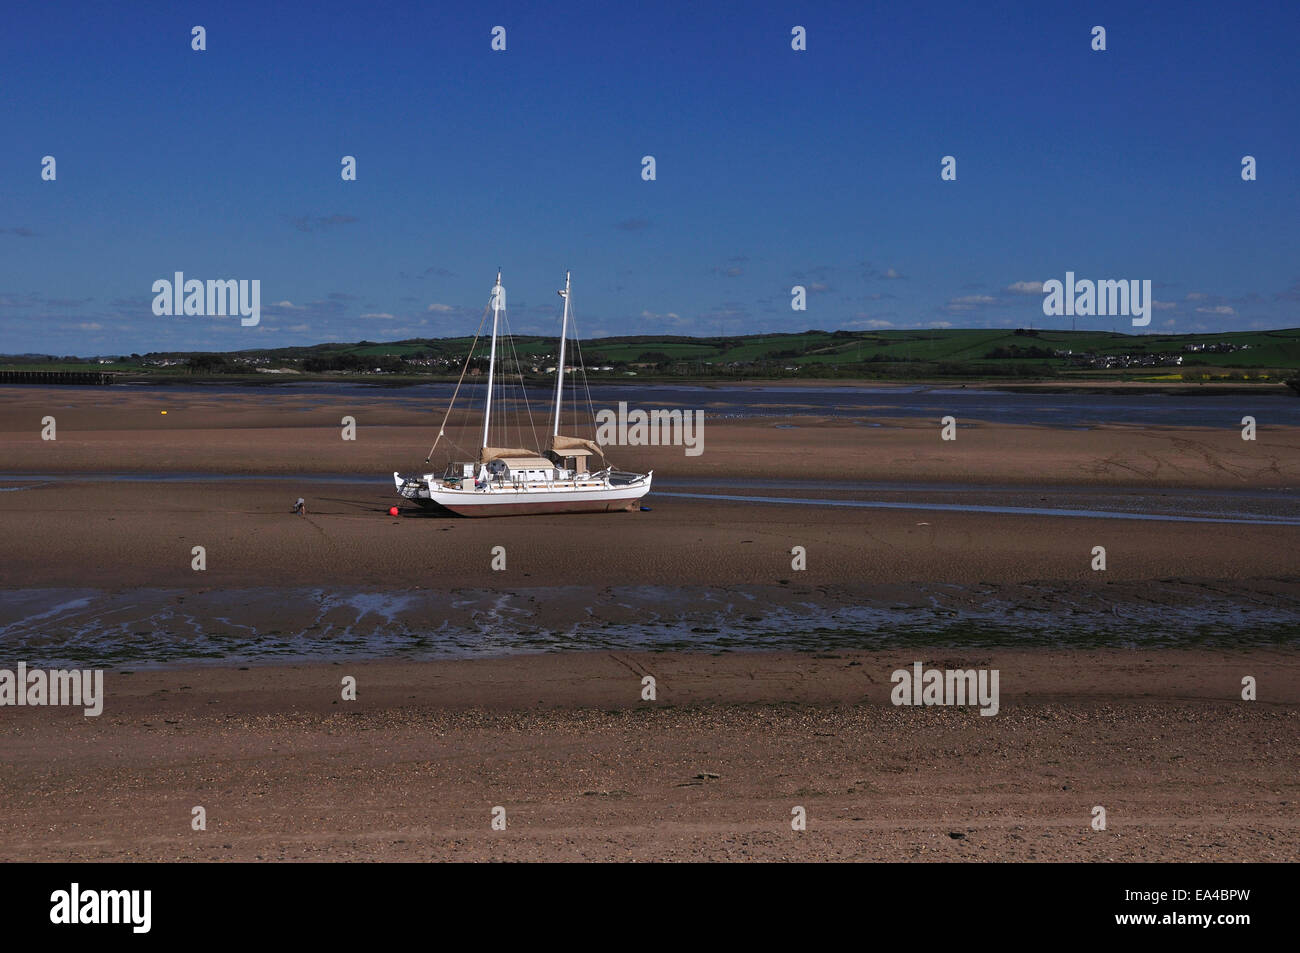 A single yacht on the Torridge estuary at low tide UK Stock Photo